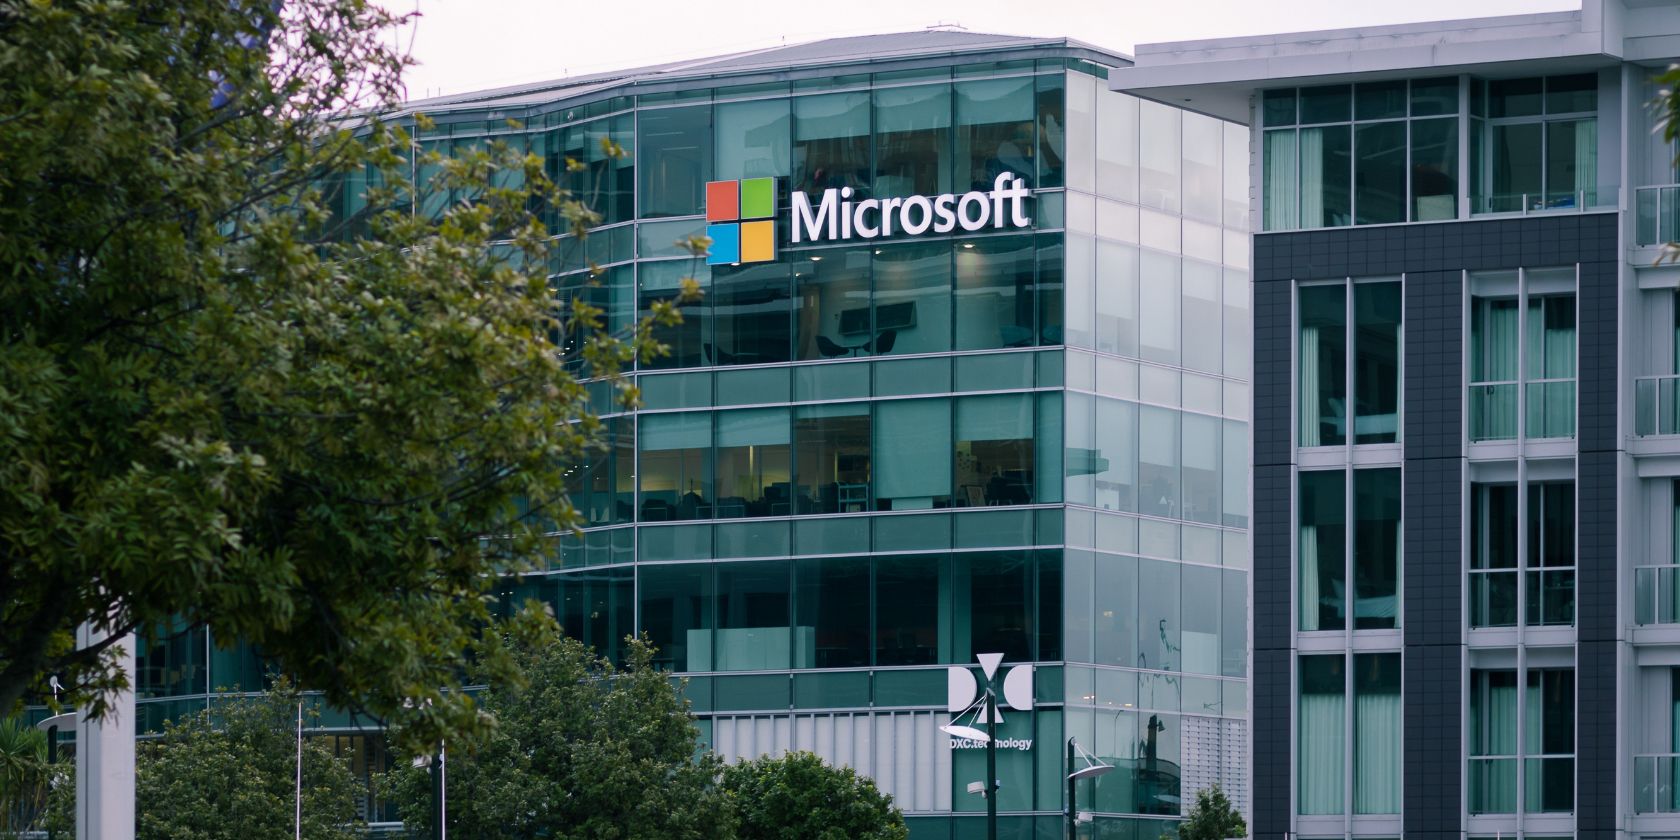 Microsoft Office logo on a glass building facade